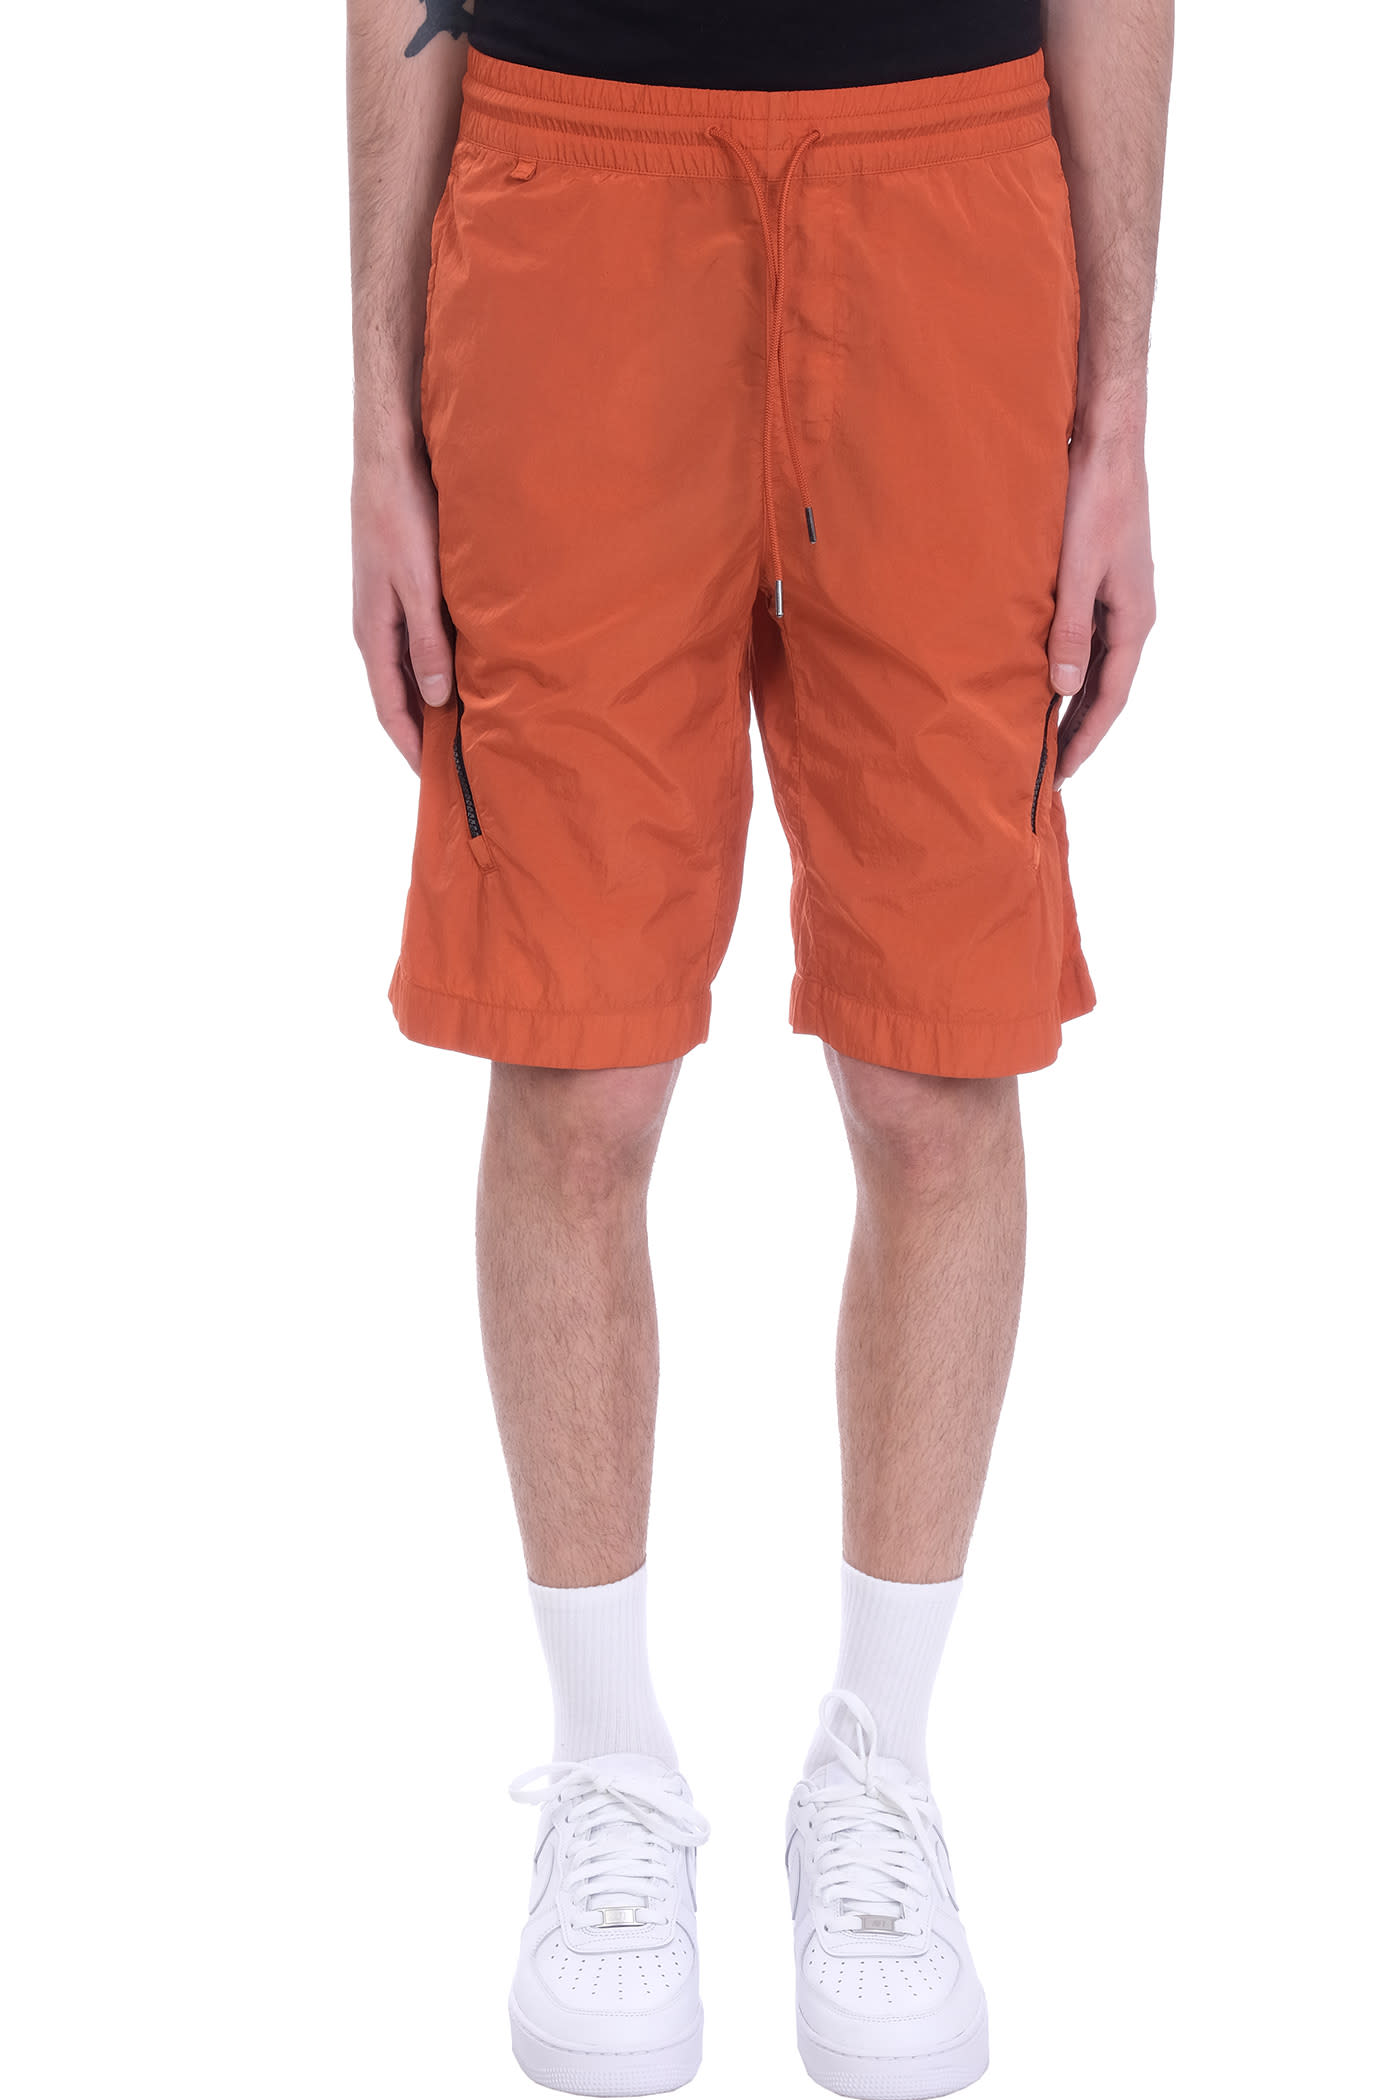 C.P. Company Shorts In Orange Synthetic Fibers